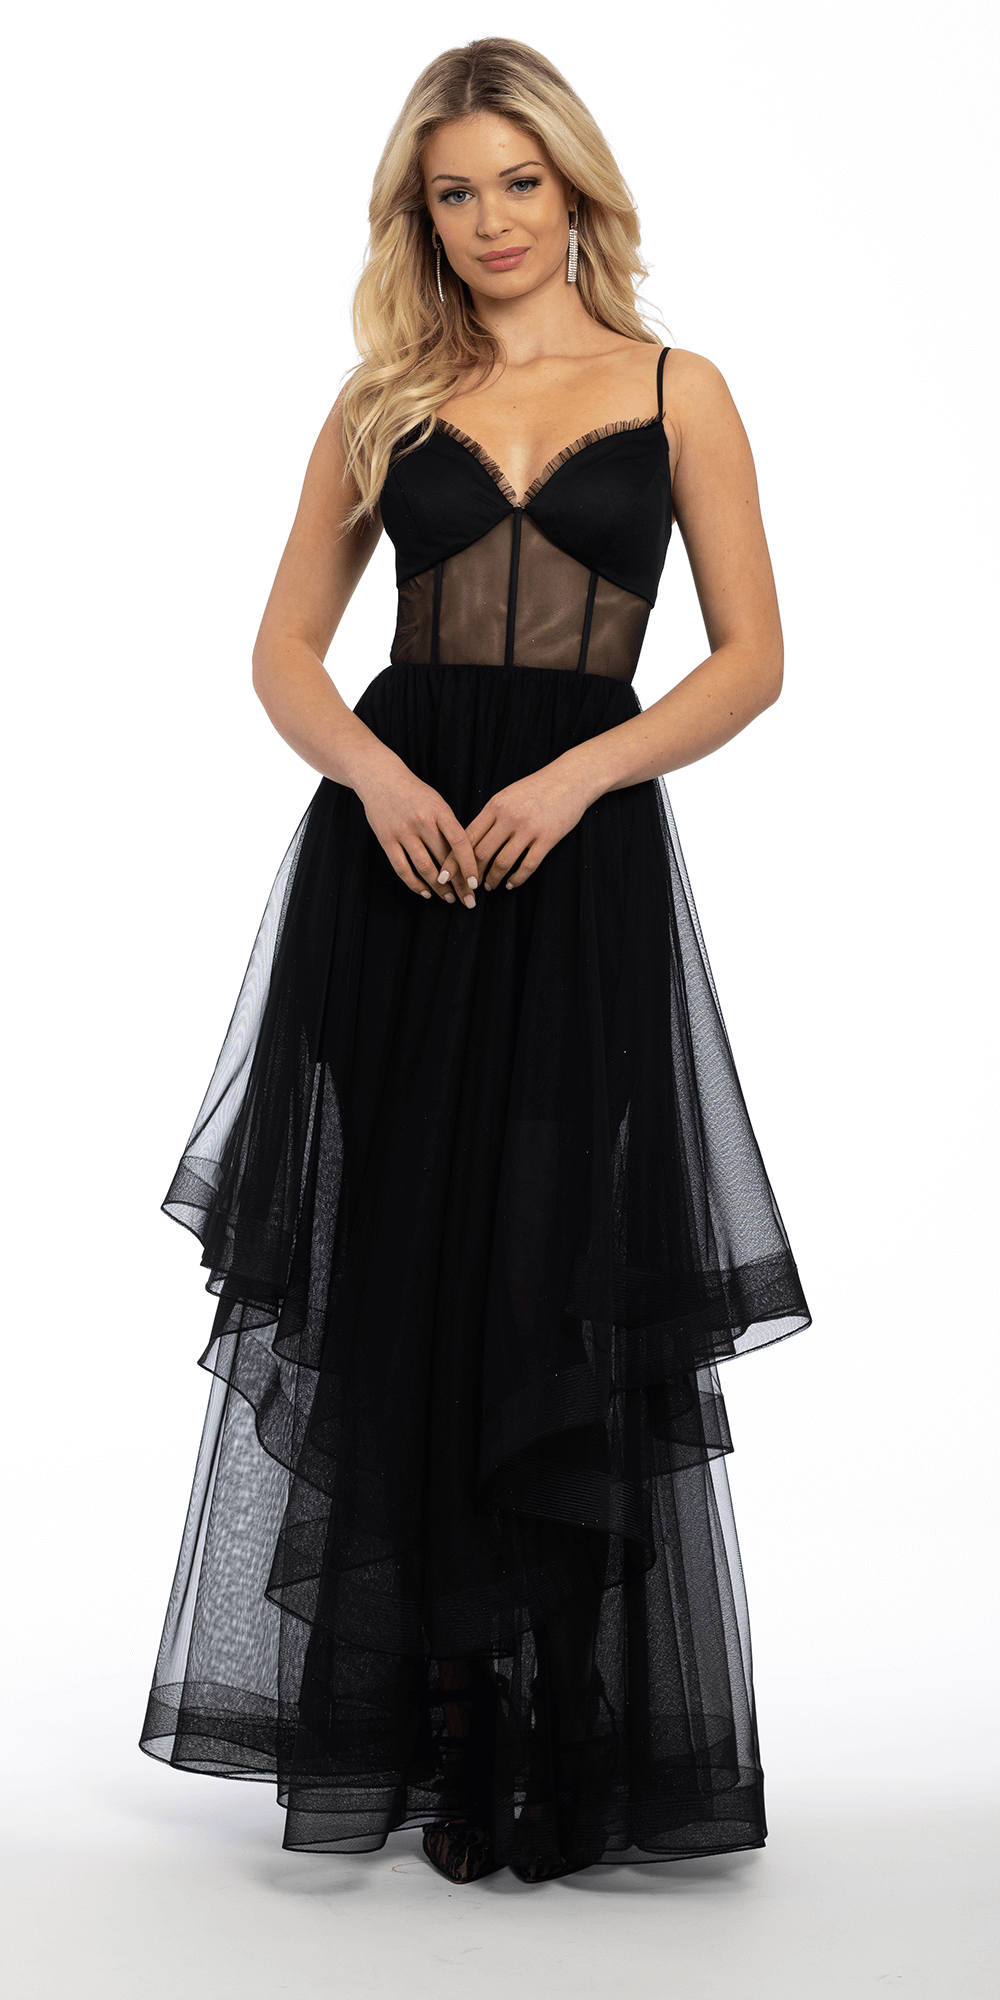 Camille La Vie Tiered Mesh Corset Lace Up Back Dress missy / 2 / black